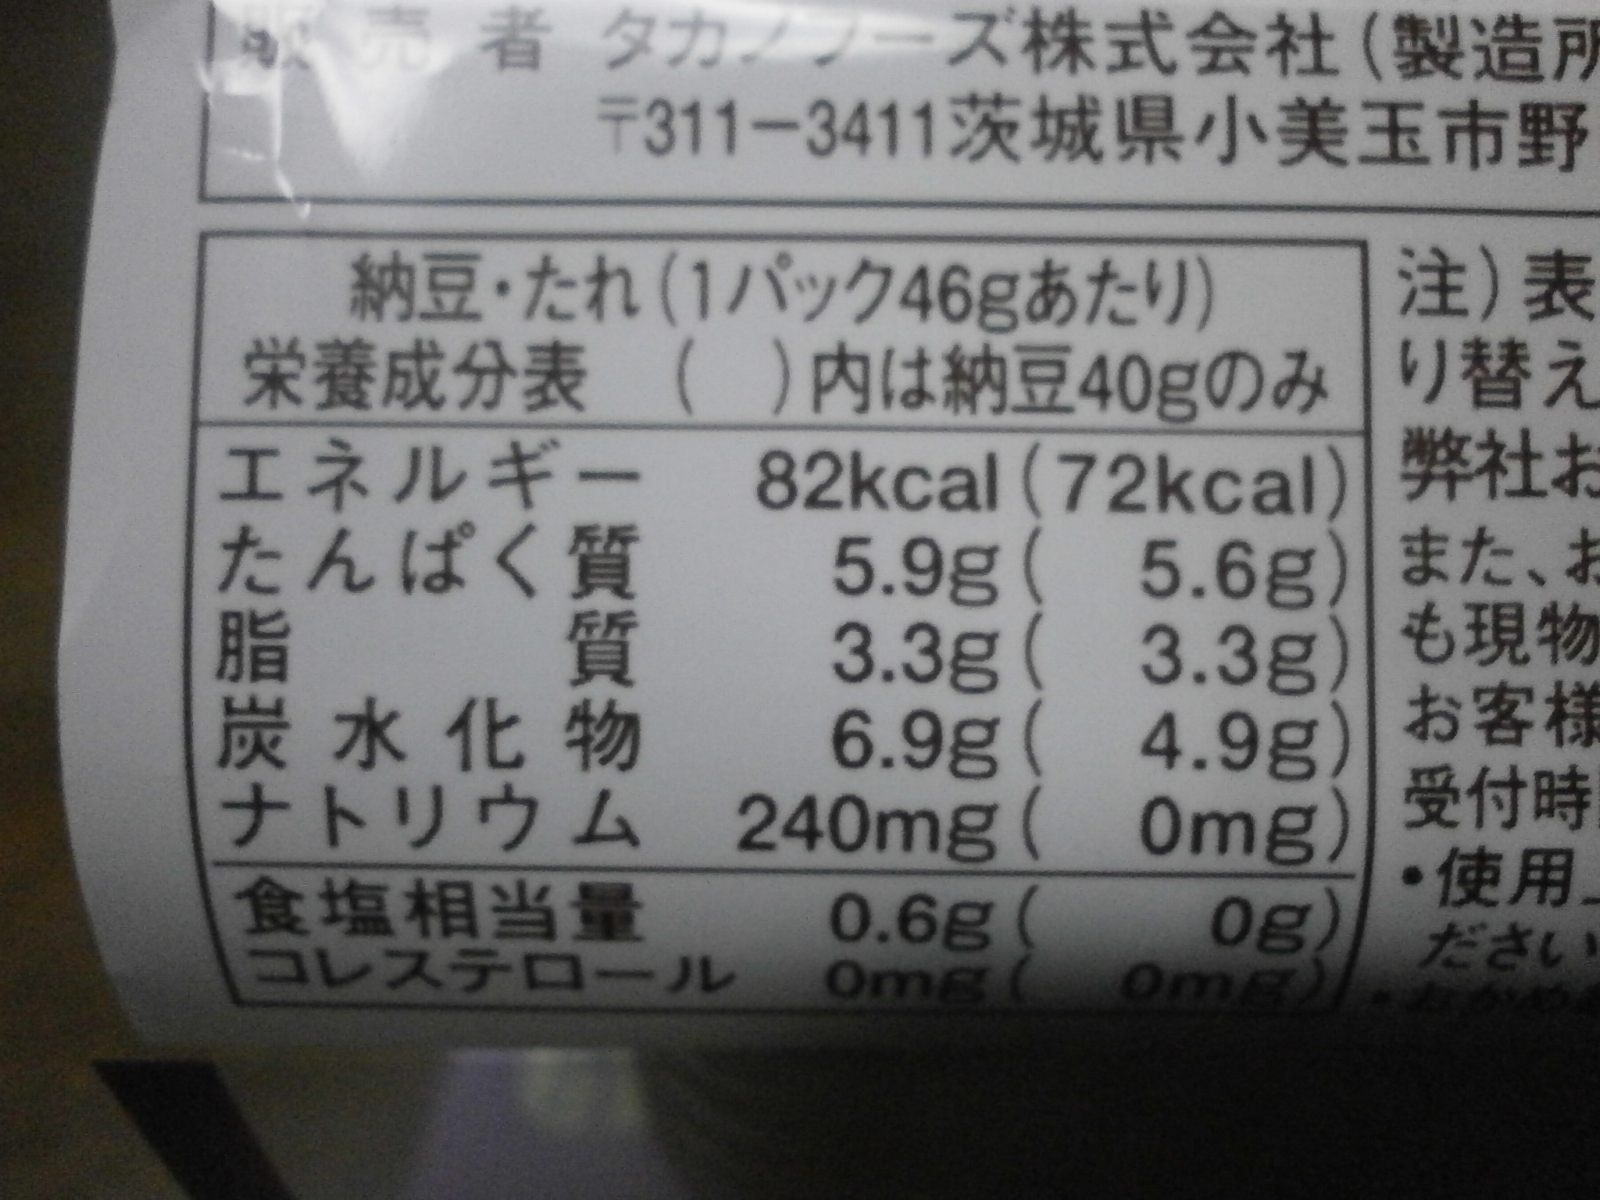 Algas Shiso natto (soja fermentada Okame)